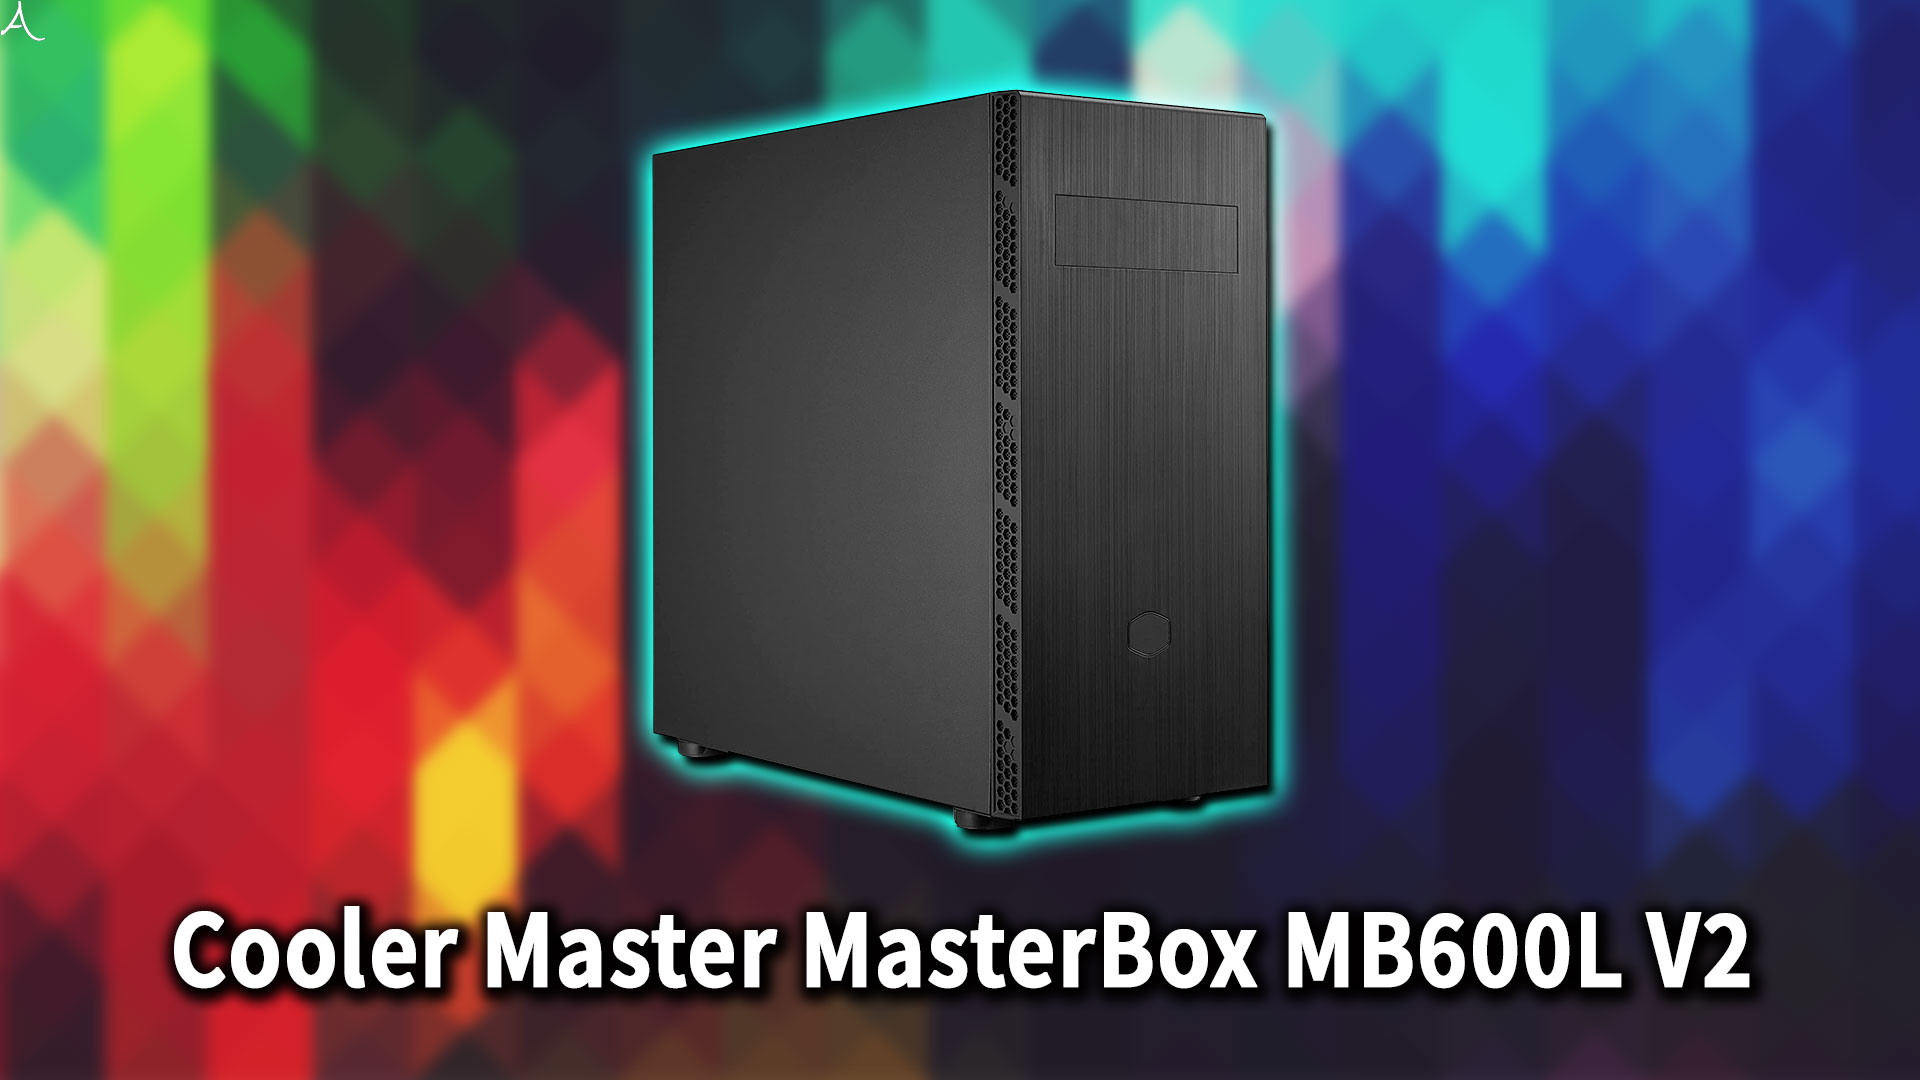 ｢Cooler Master MasterBox MB600L V2｣のサイズ・大きさはどれくらい？